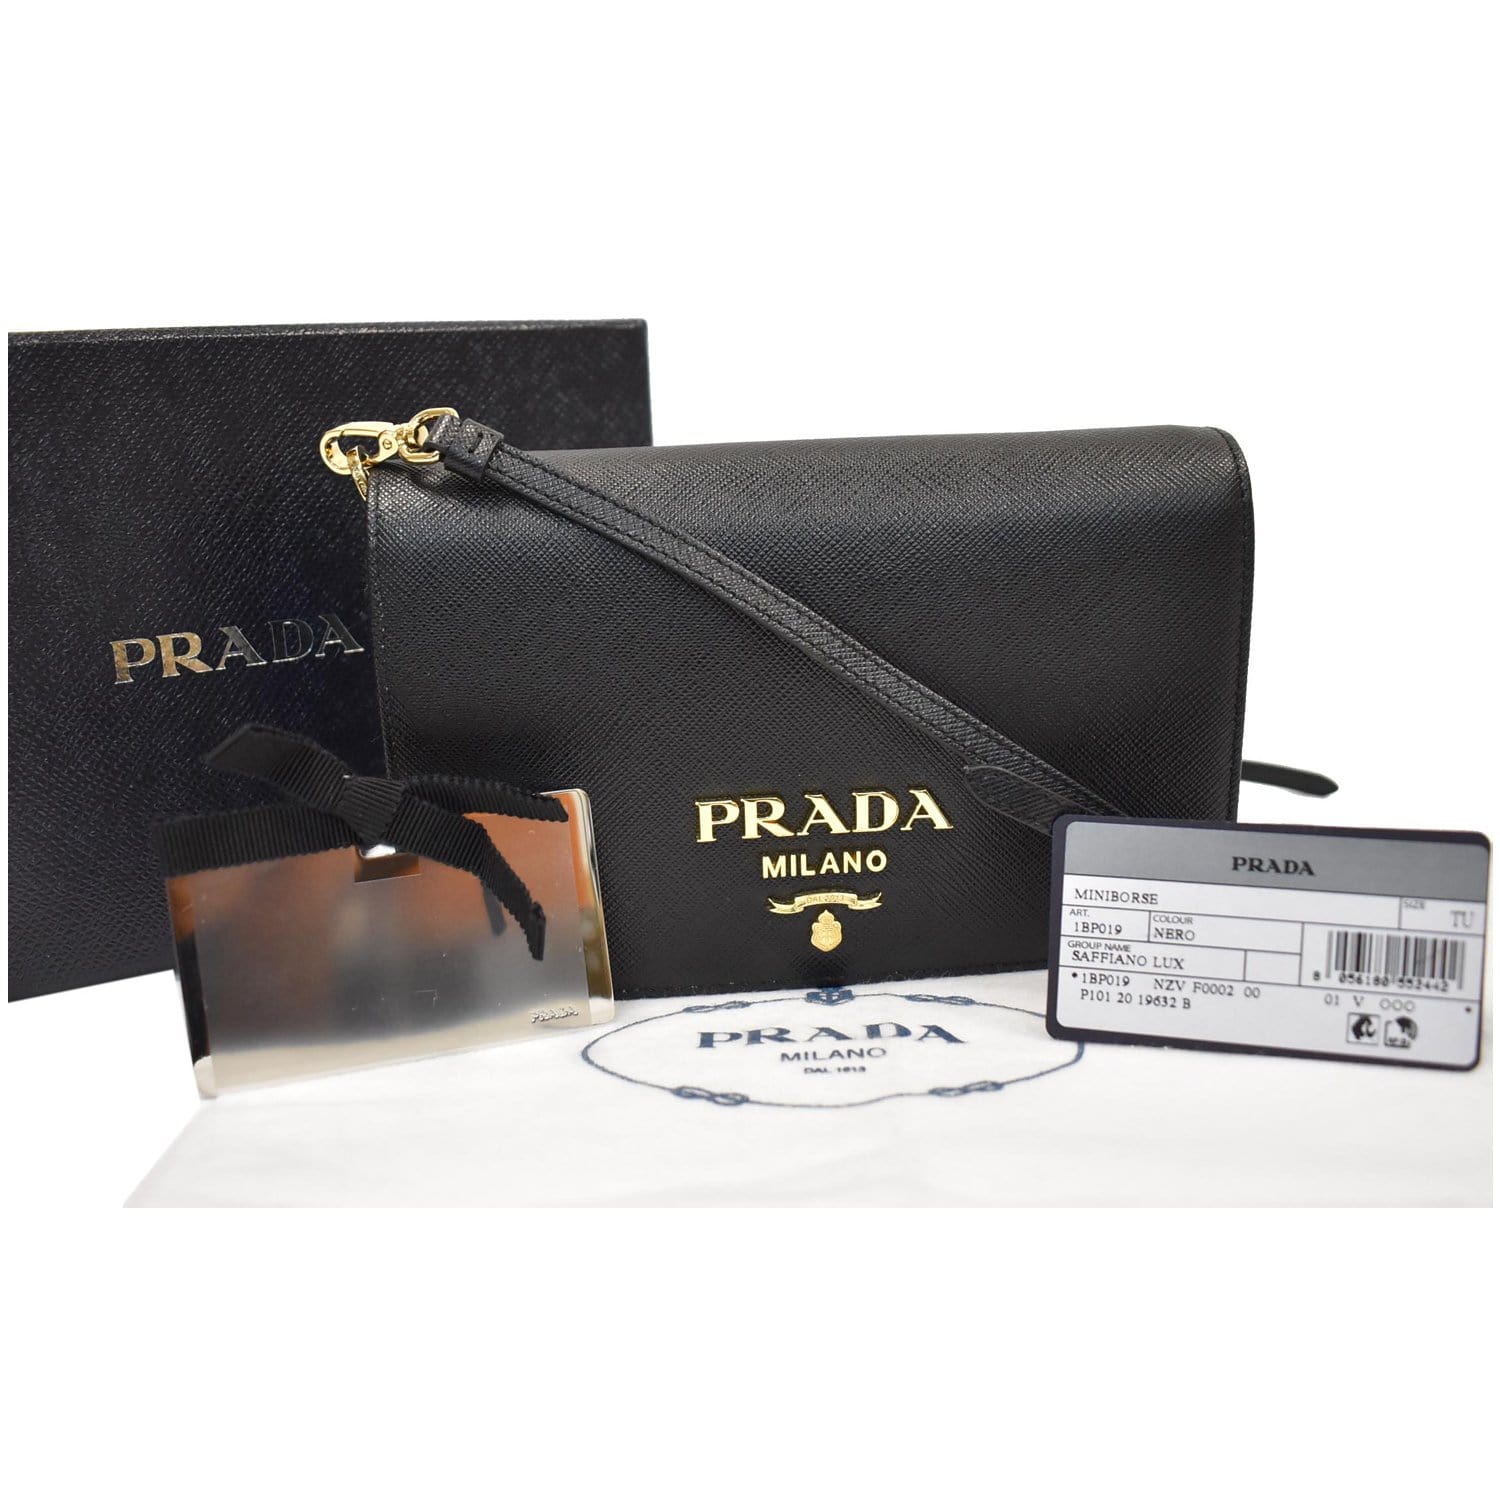 Prada Pattina Flap Shoulder Bag Saffiano Leather Small White 1319881